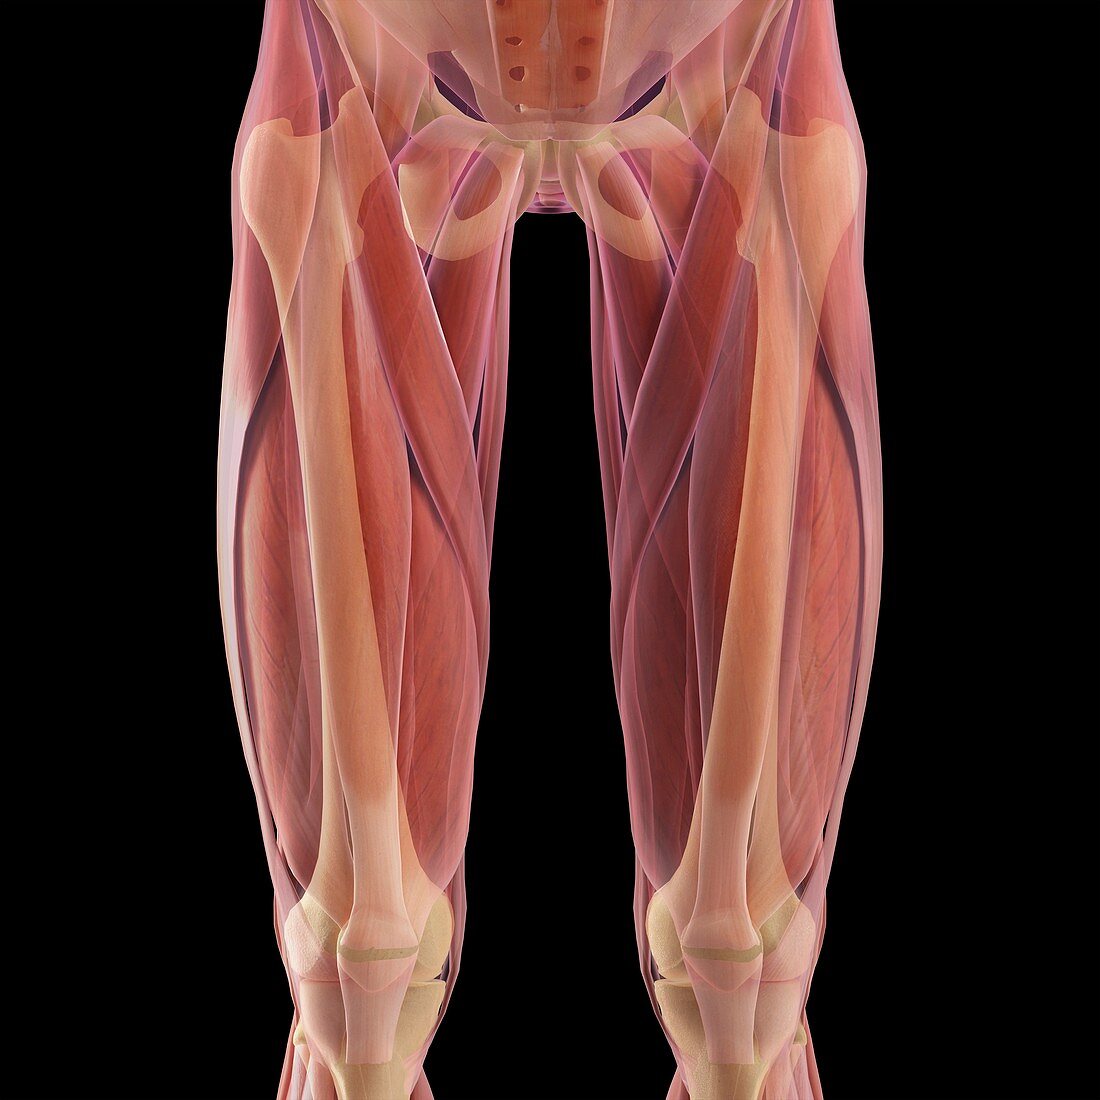 Musculoskeletal System of Upper Legs